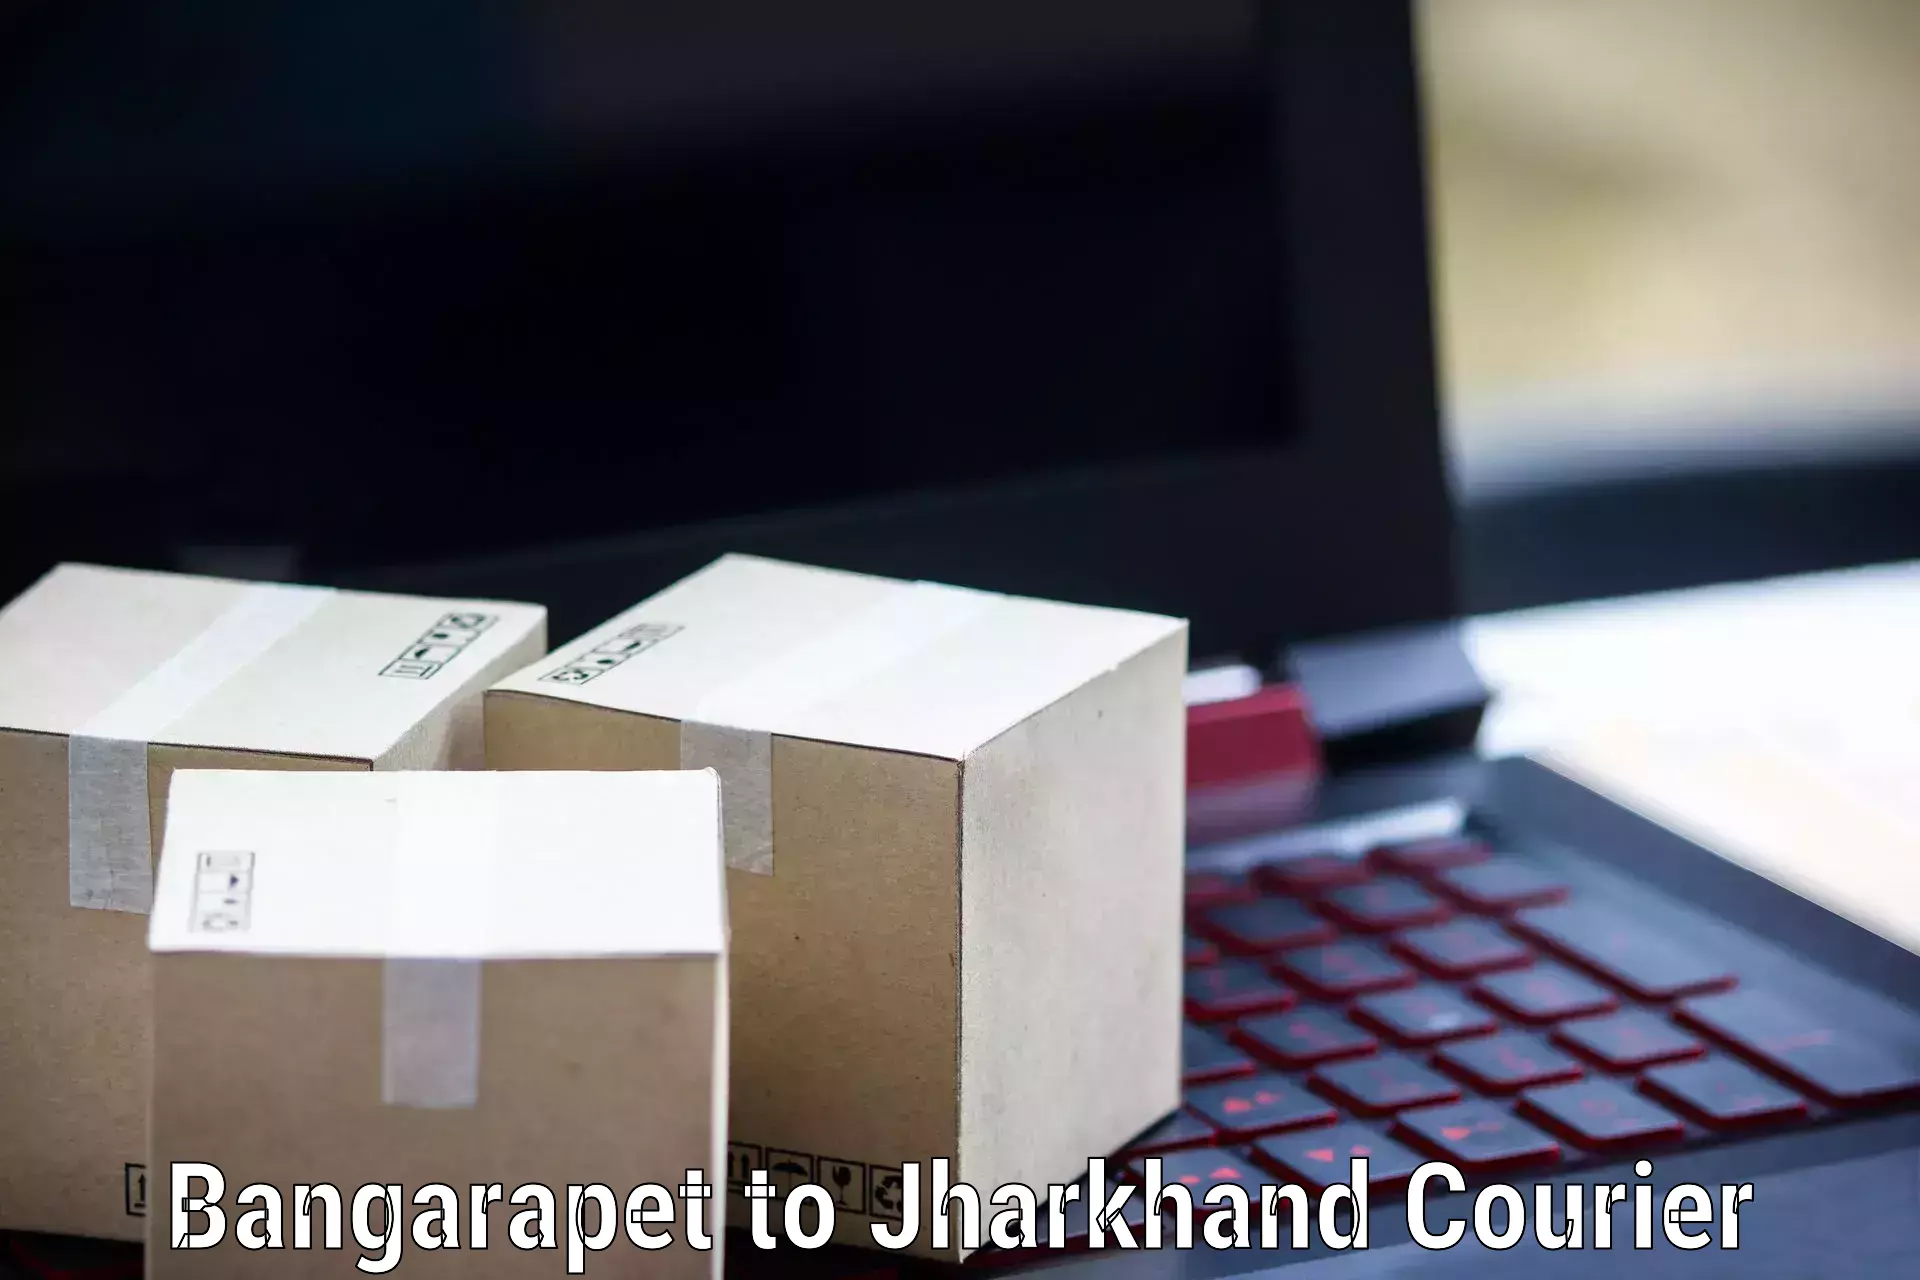 Large-scale shipping solutions Bangarapet to Jamshedpur